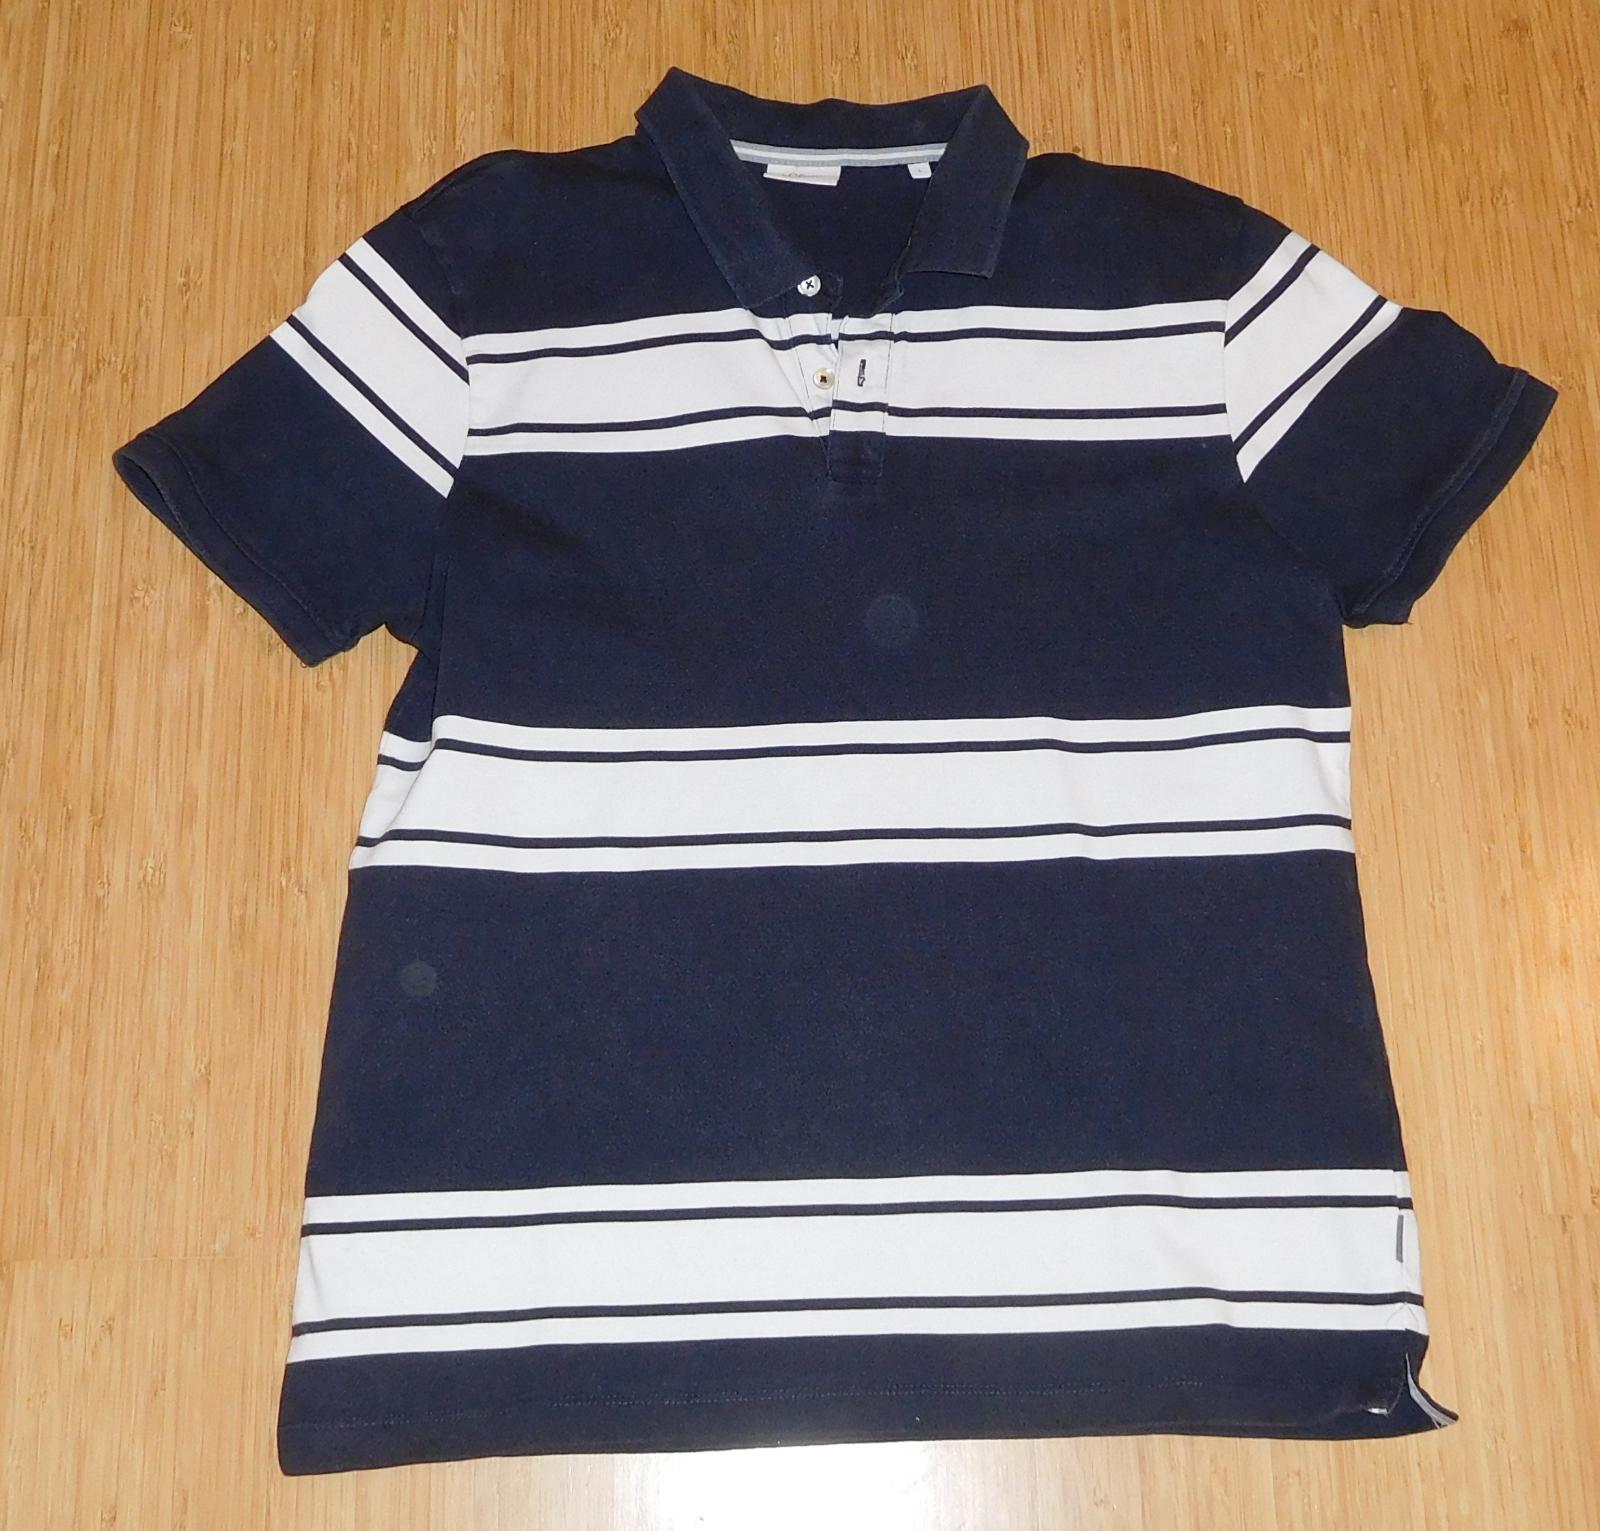 S.OLIVER - modrobiele pruhované tričko s golierom - L - Pánske oblečenie